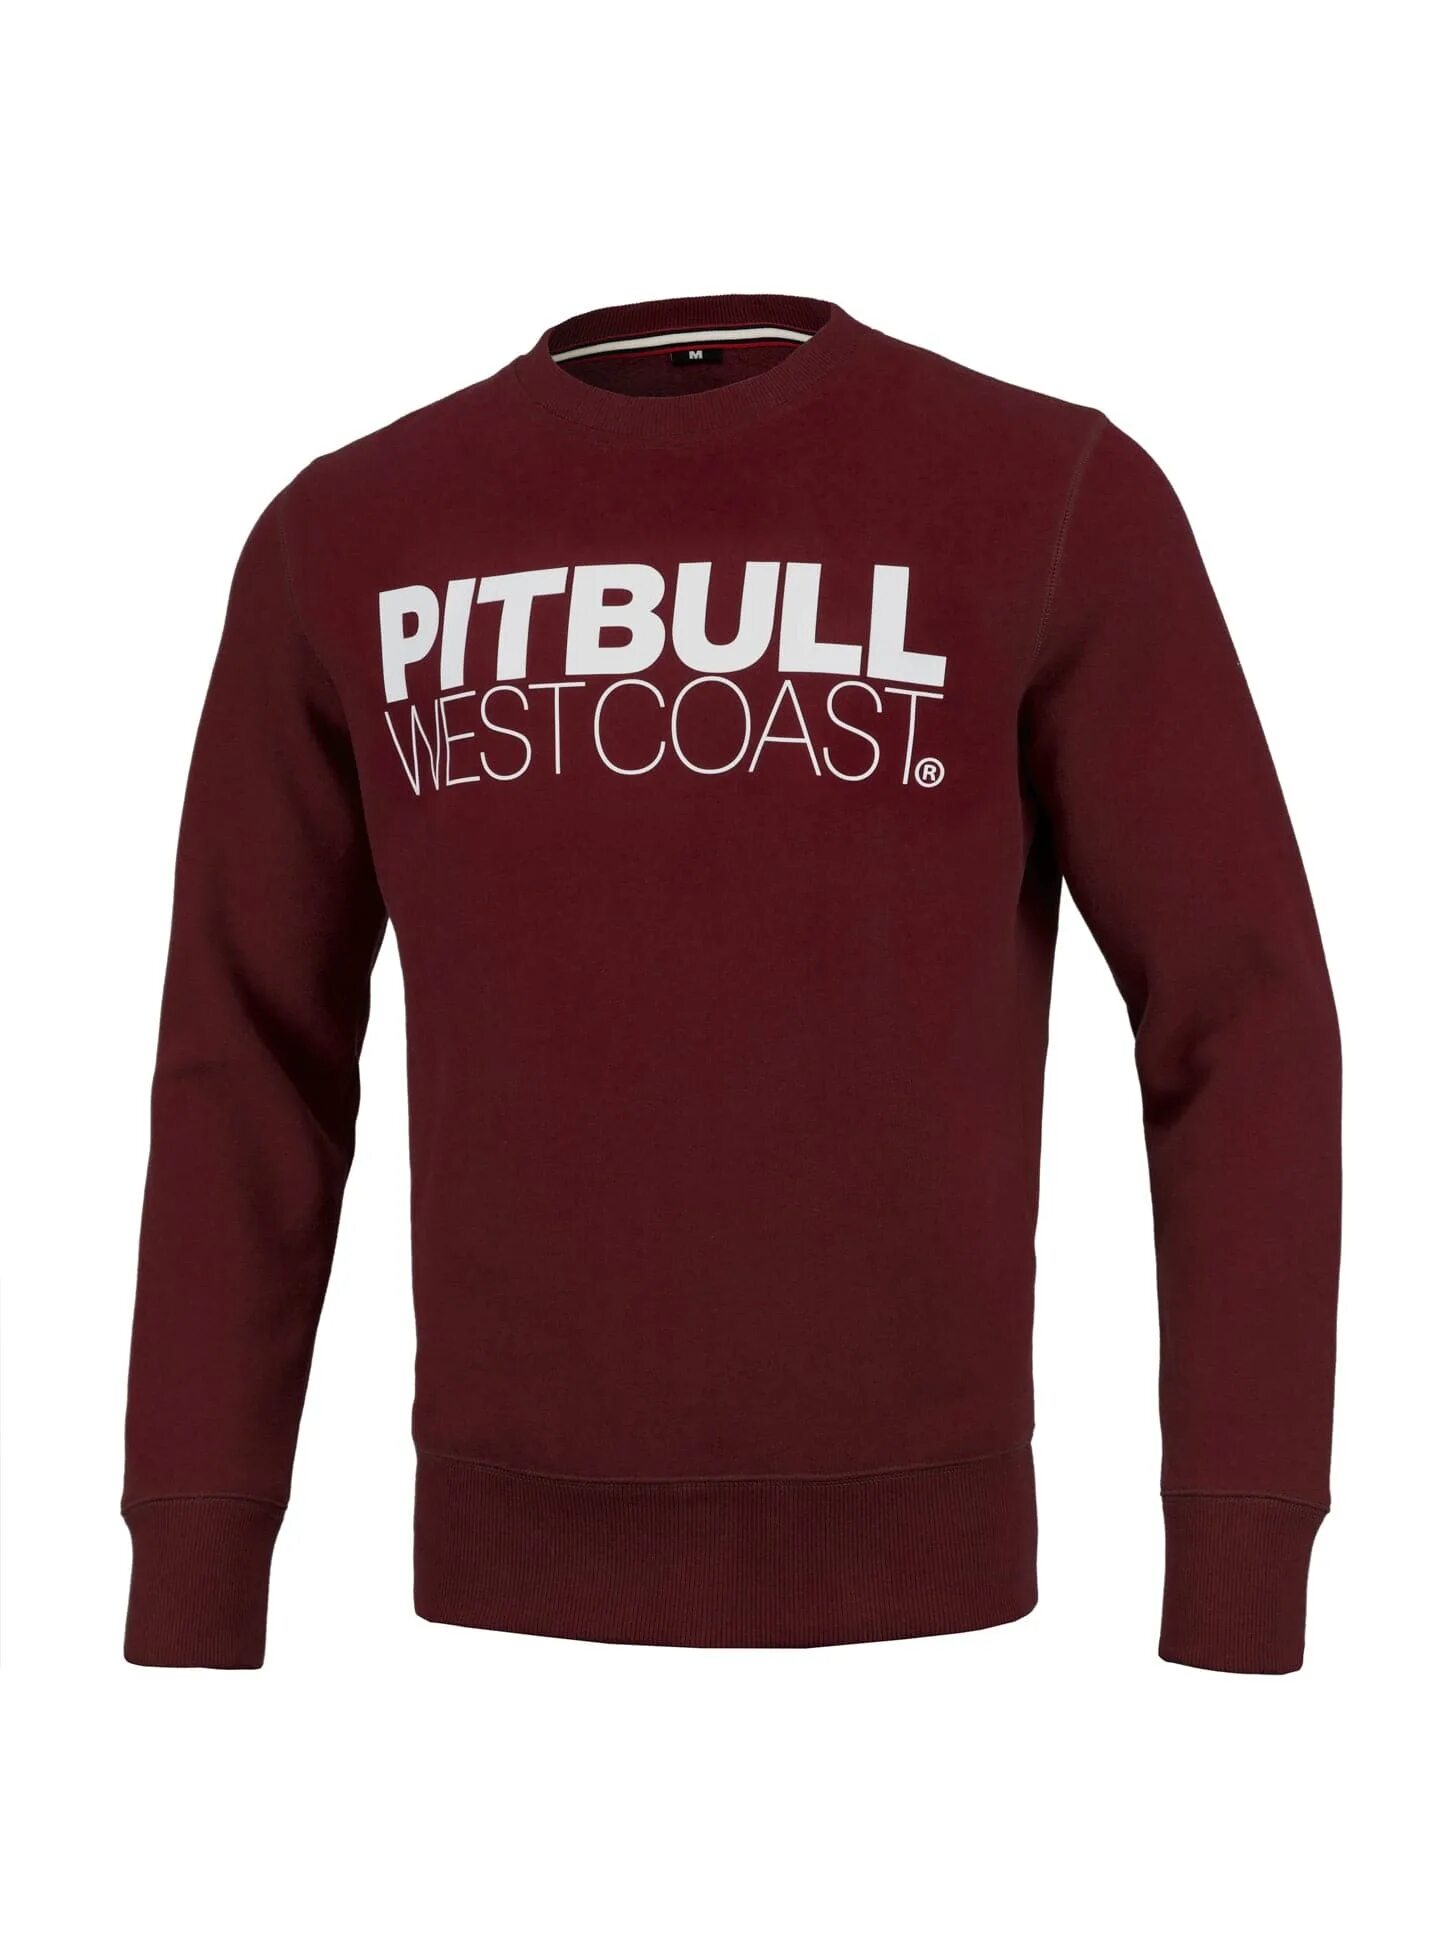 Pitbull одежда. Толстовка Pitbull Germany. Свитшот Pitbull West Coast. Олимпийка Pitbull. Pitbull марка одежды.